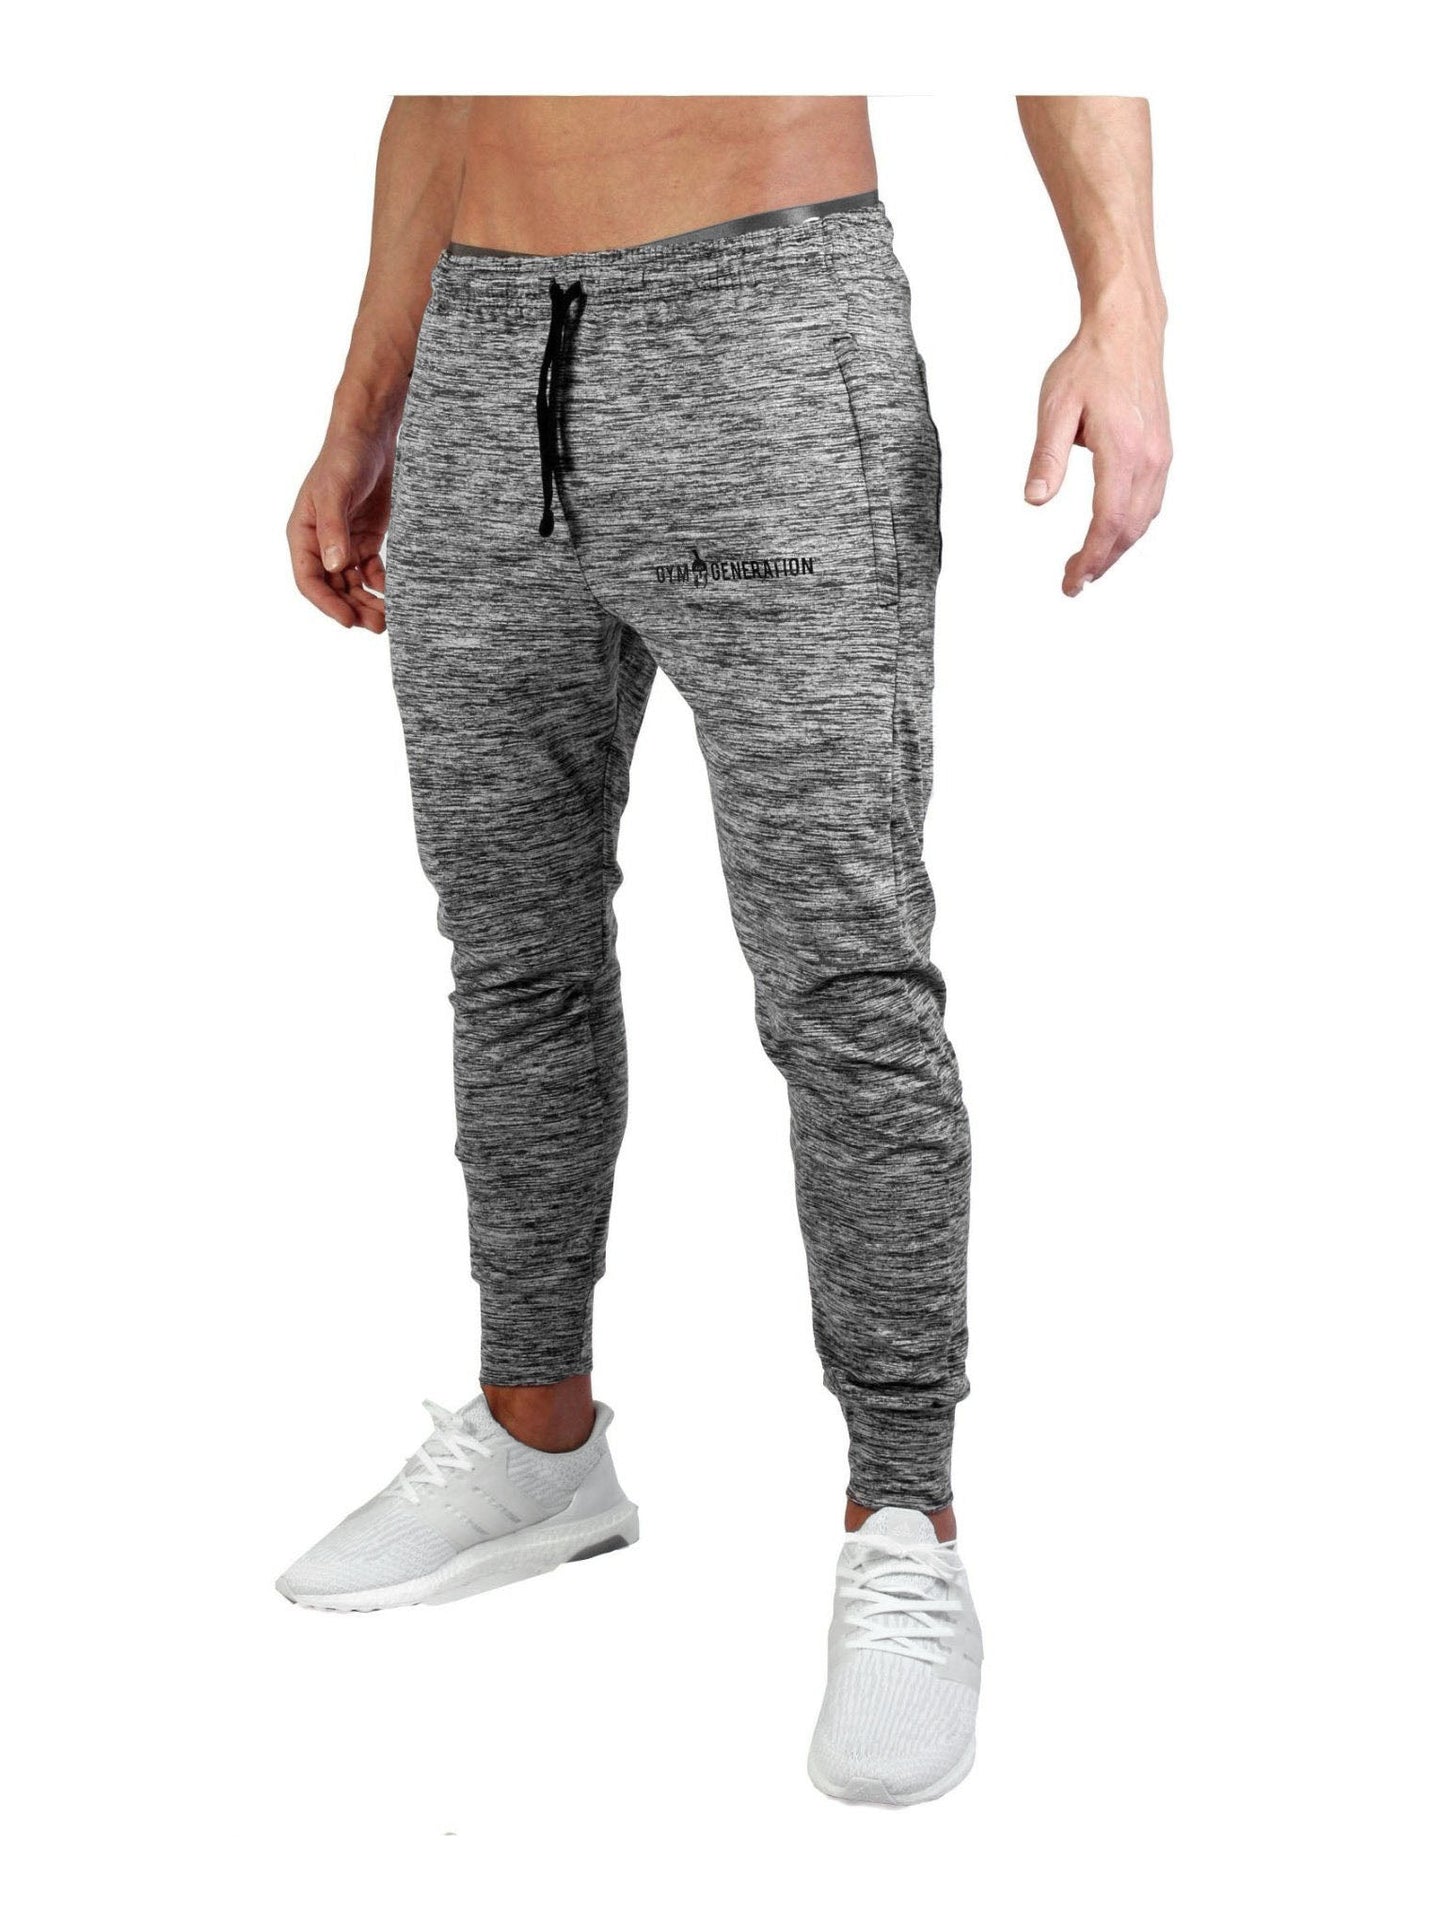 V8 Premium Fitness Pants - Cool Grey